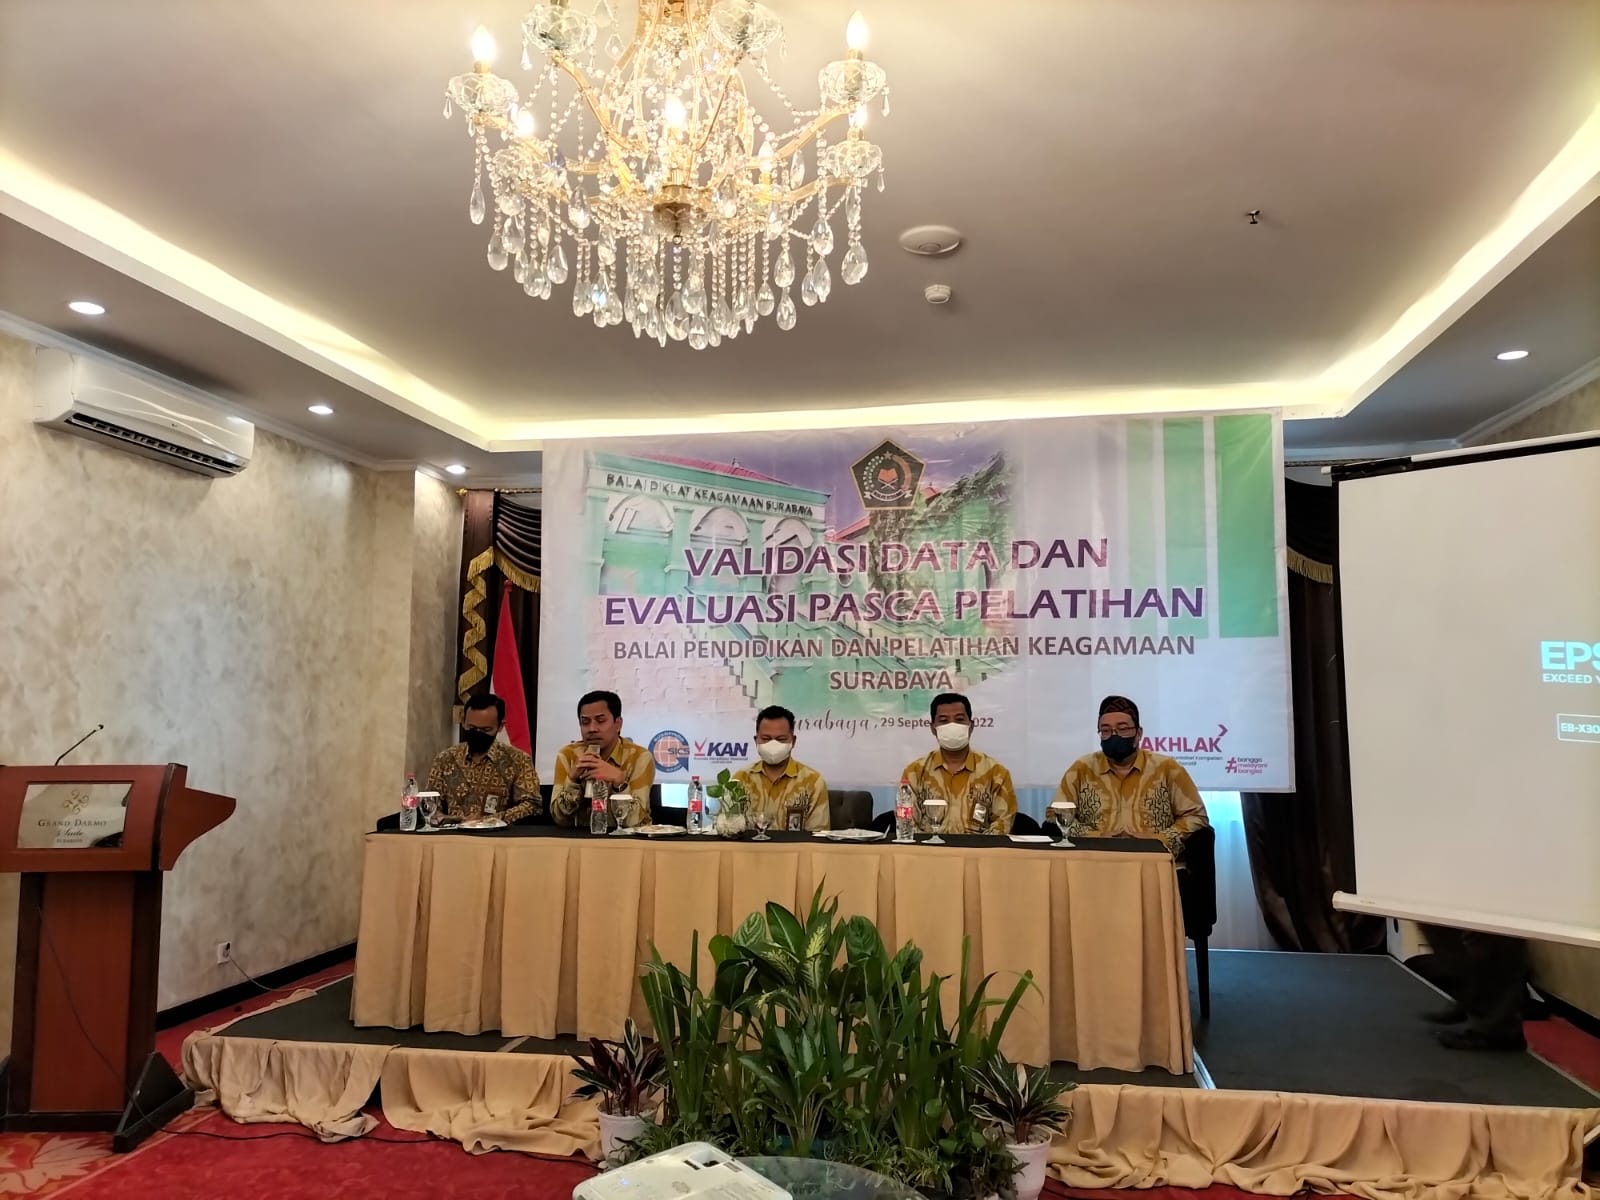 BDK Surabaya Gelar Validasi Data dan Evaluasi Pasca Pelatihan